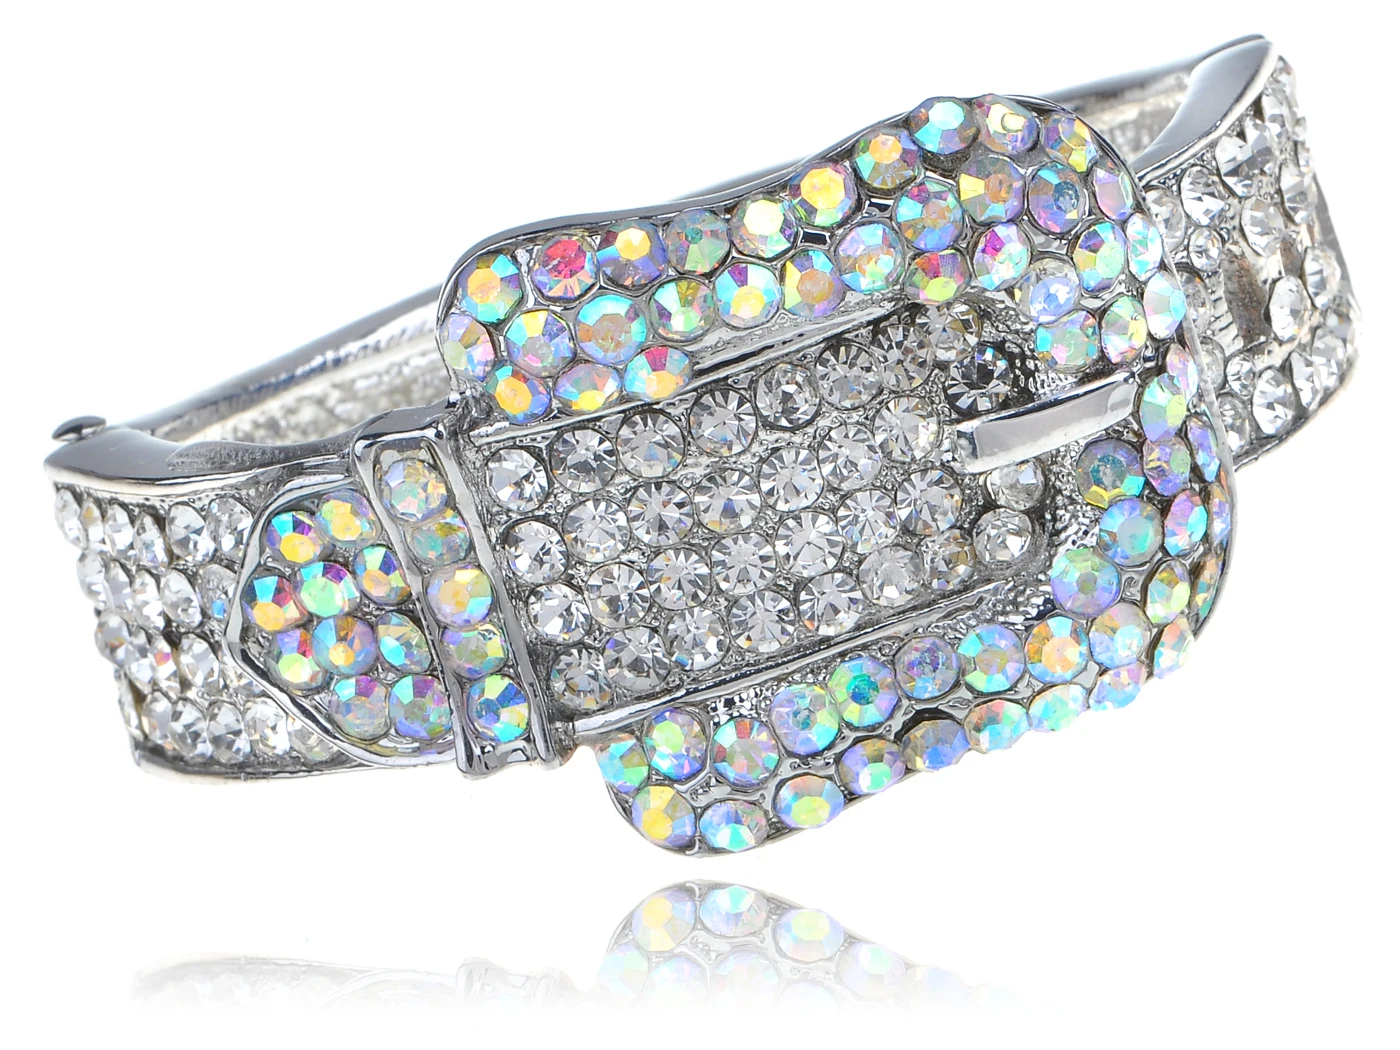 

Silvery Tone Iridescent Clear Crystal Colored Rhinestones Belt Buckle Cuff Bracelet